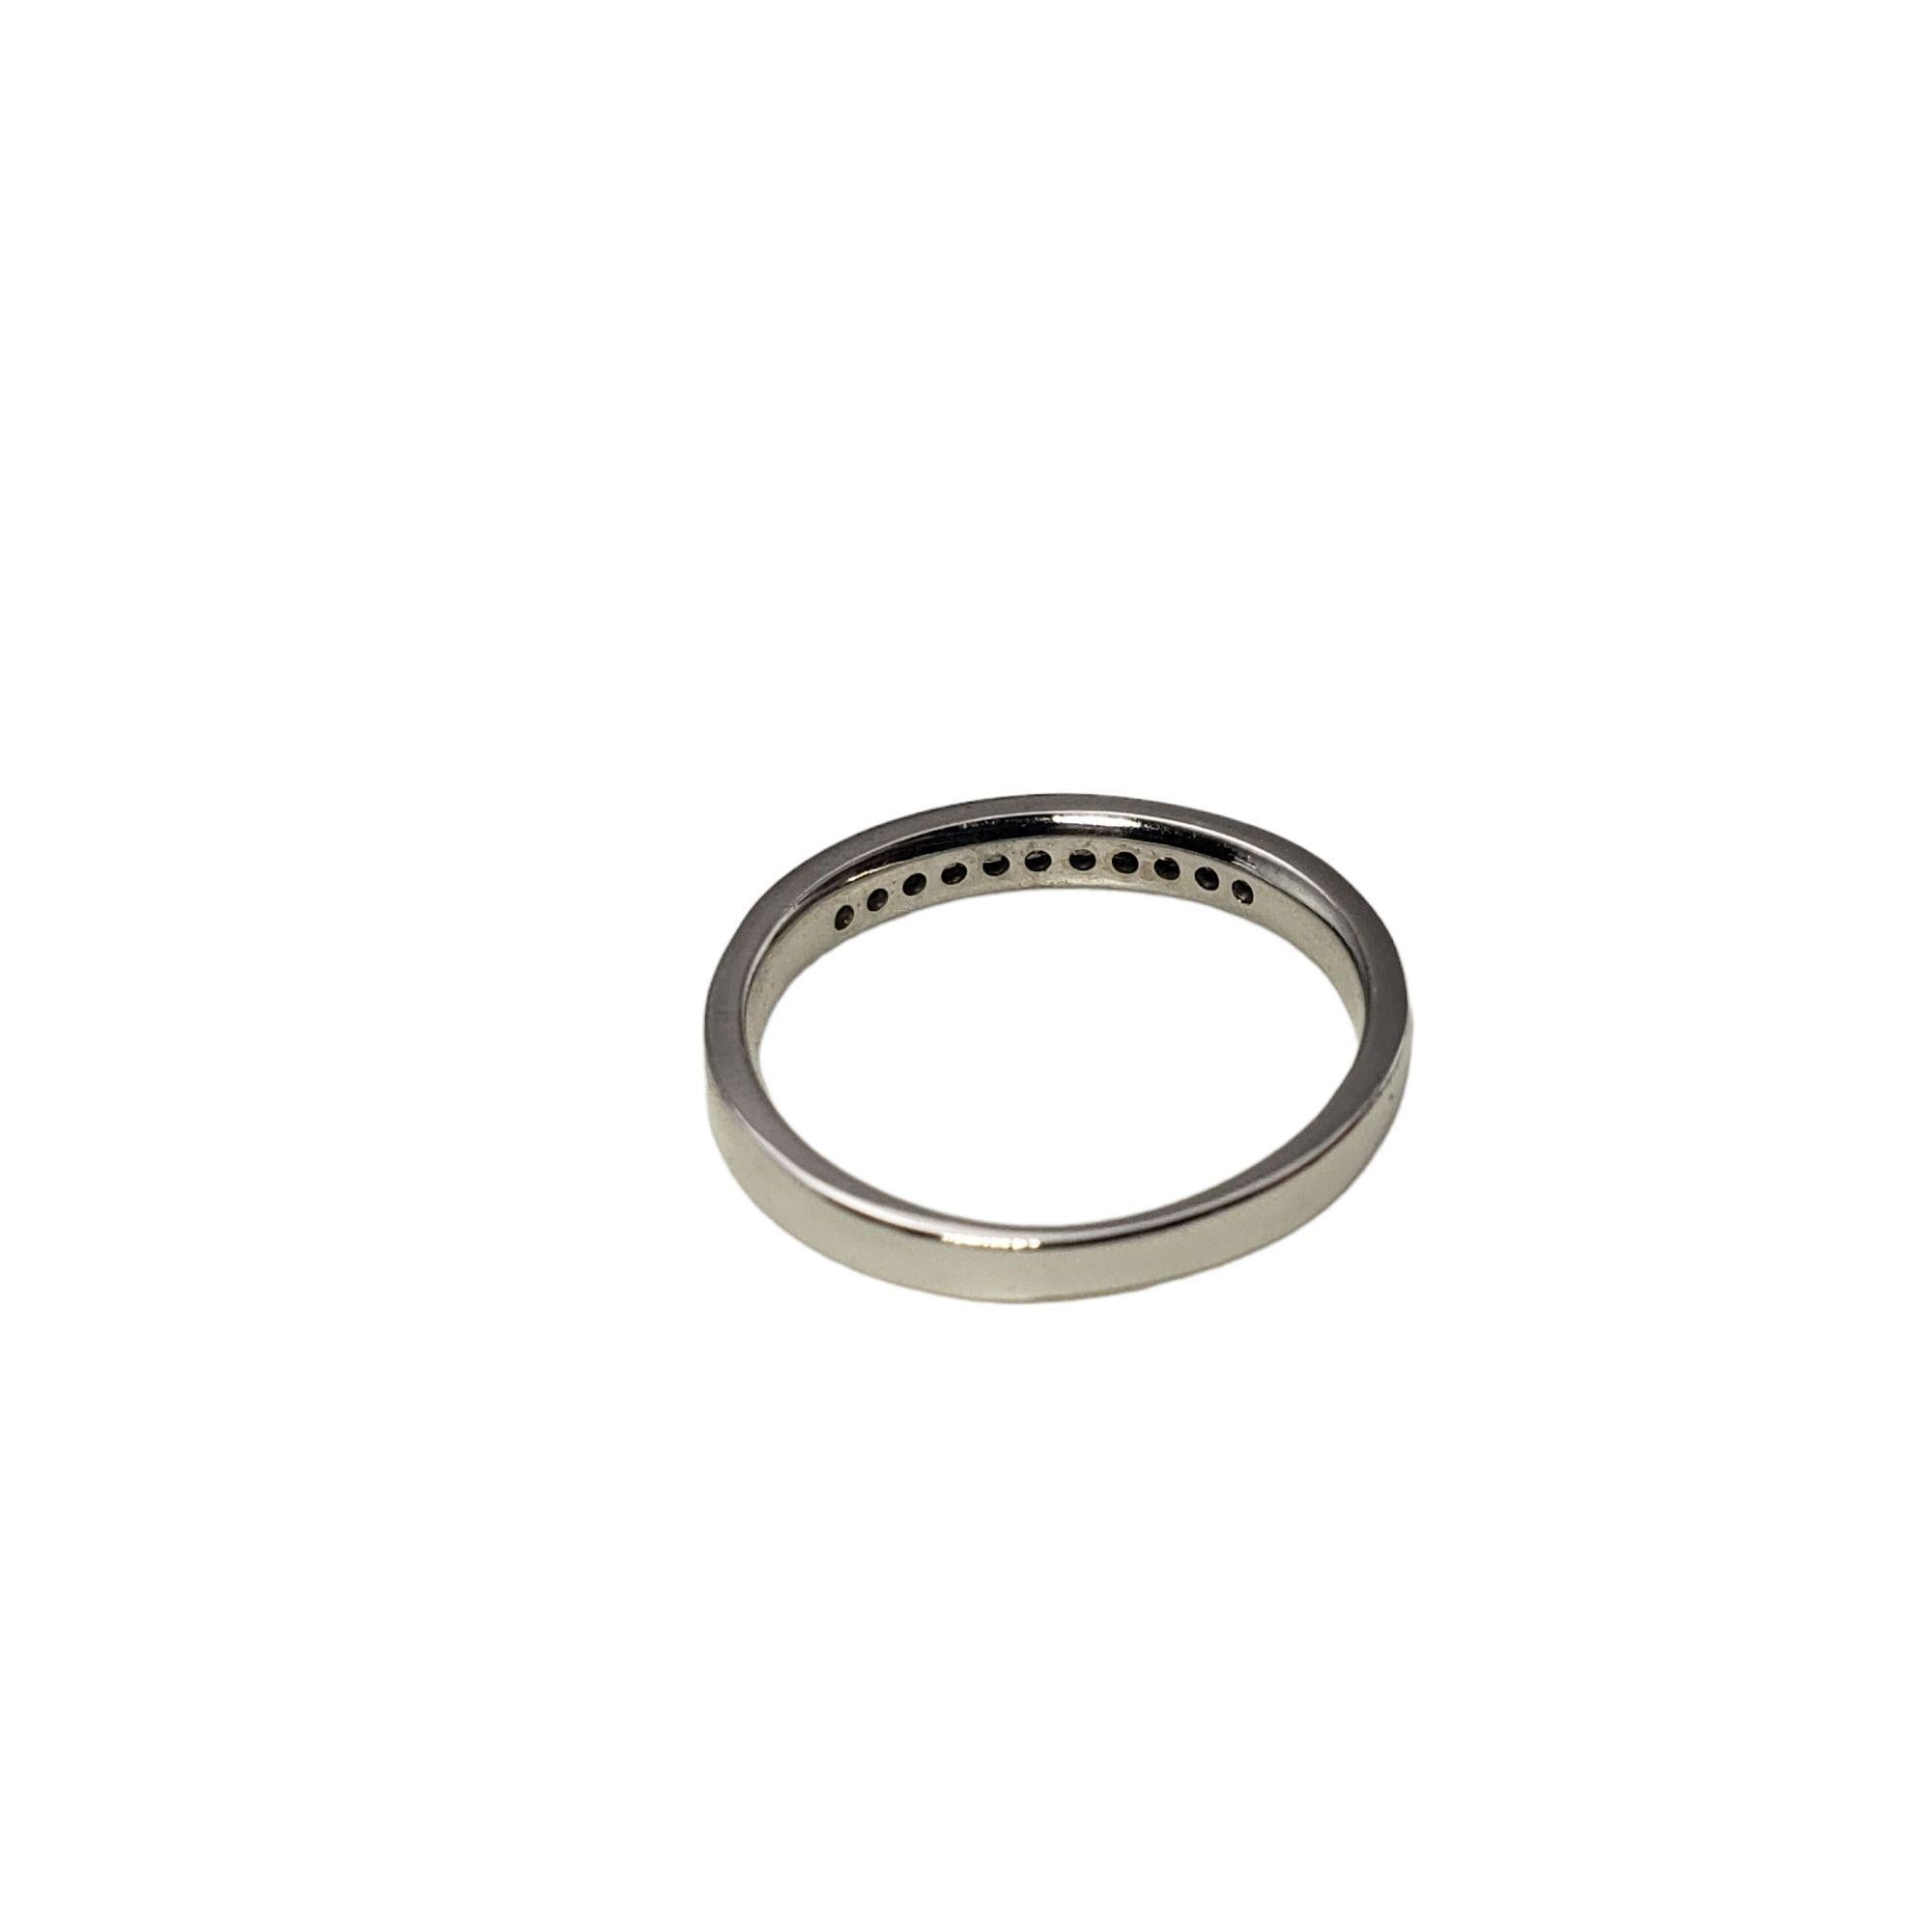 10 Karat White Gold Princess Cut Diamond Band Ring Size 5.75 #13043 For Sale 2